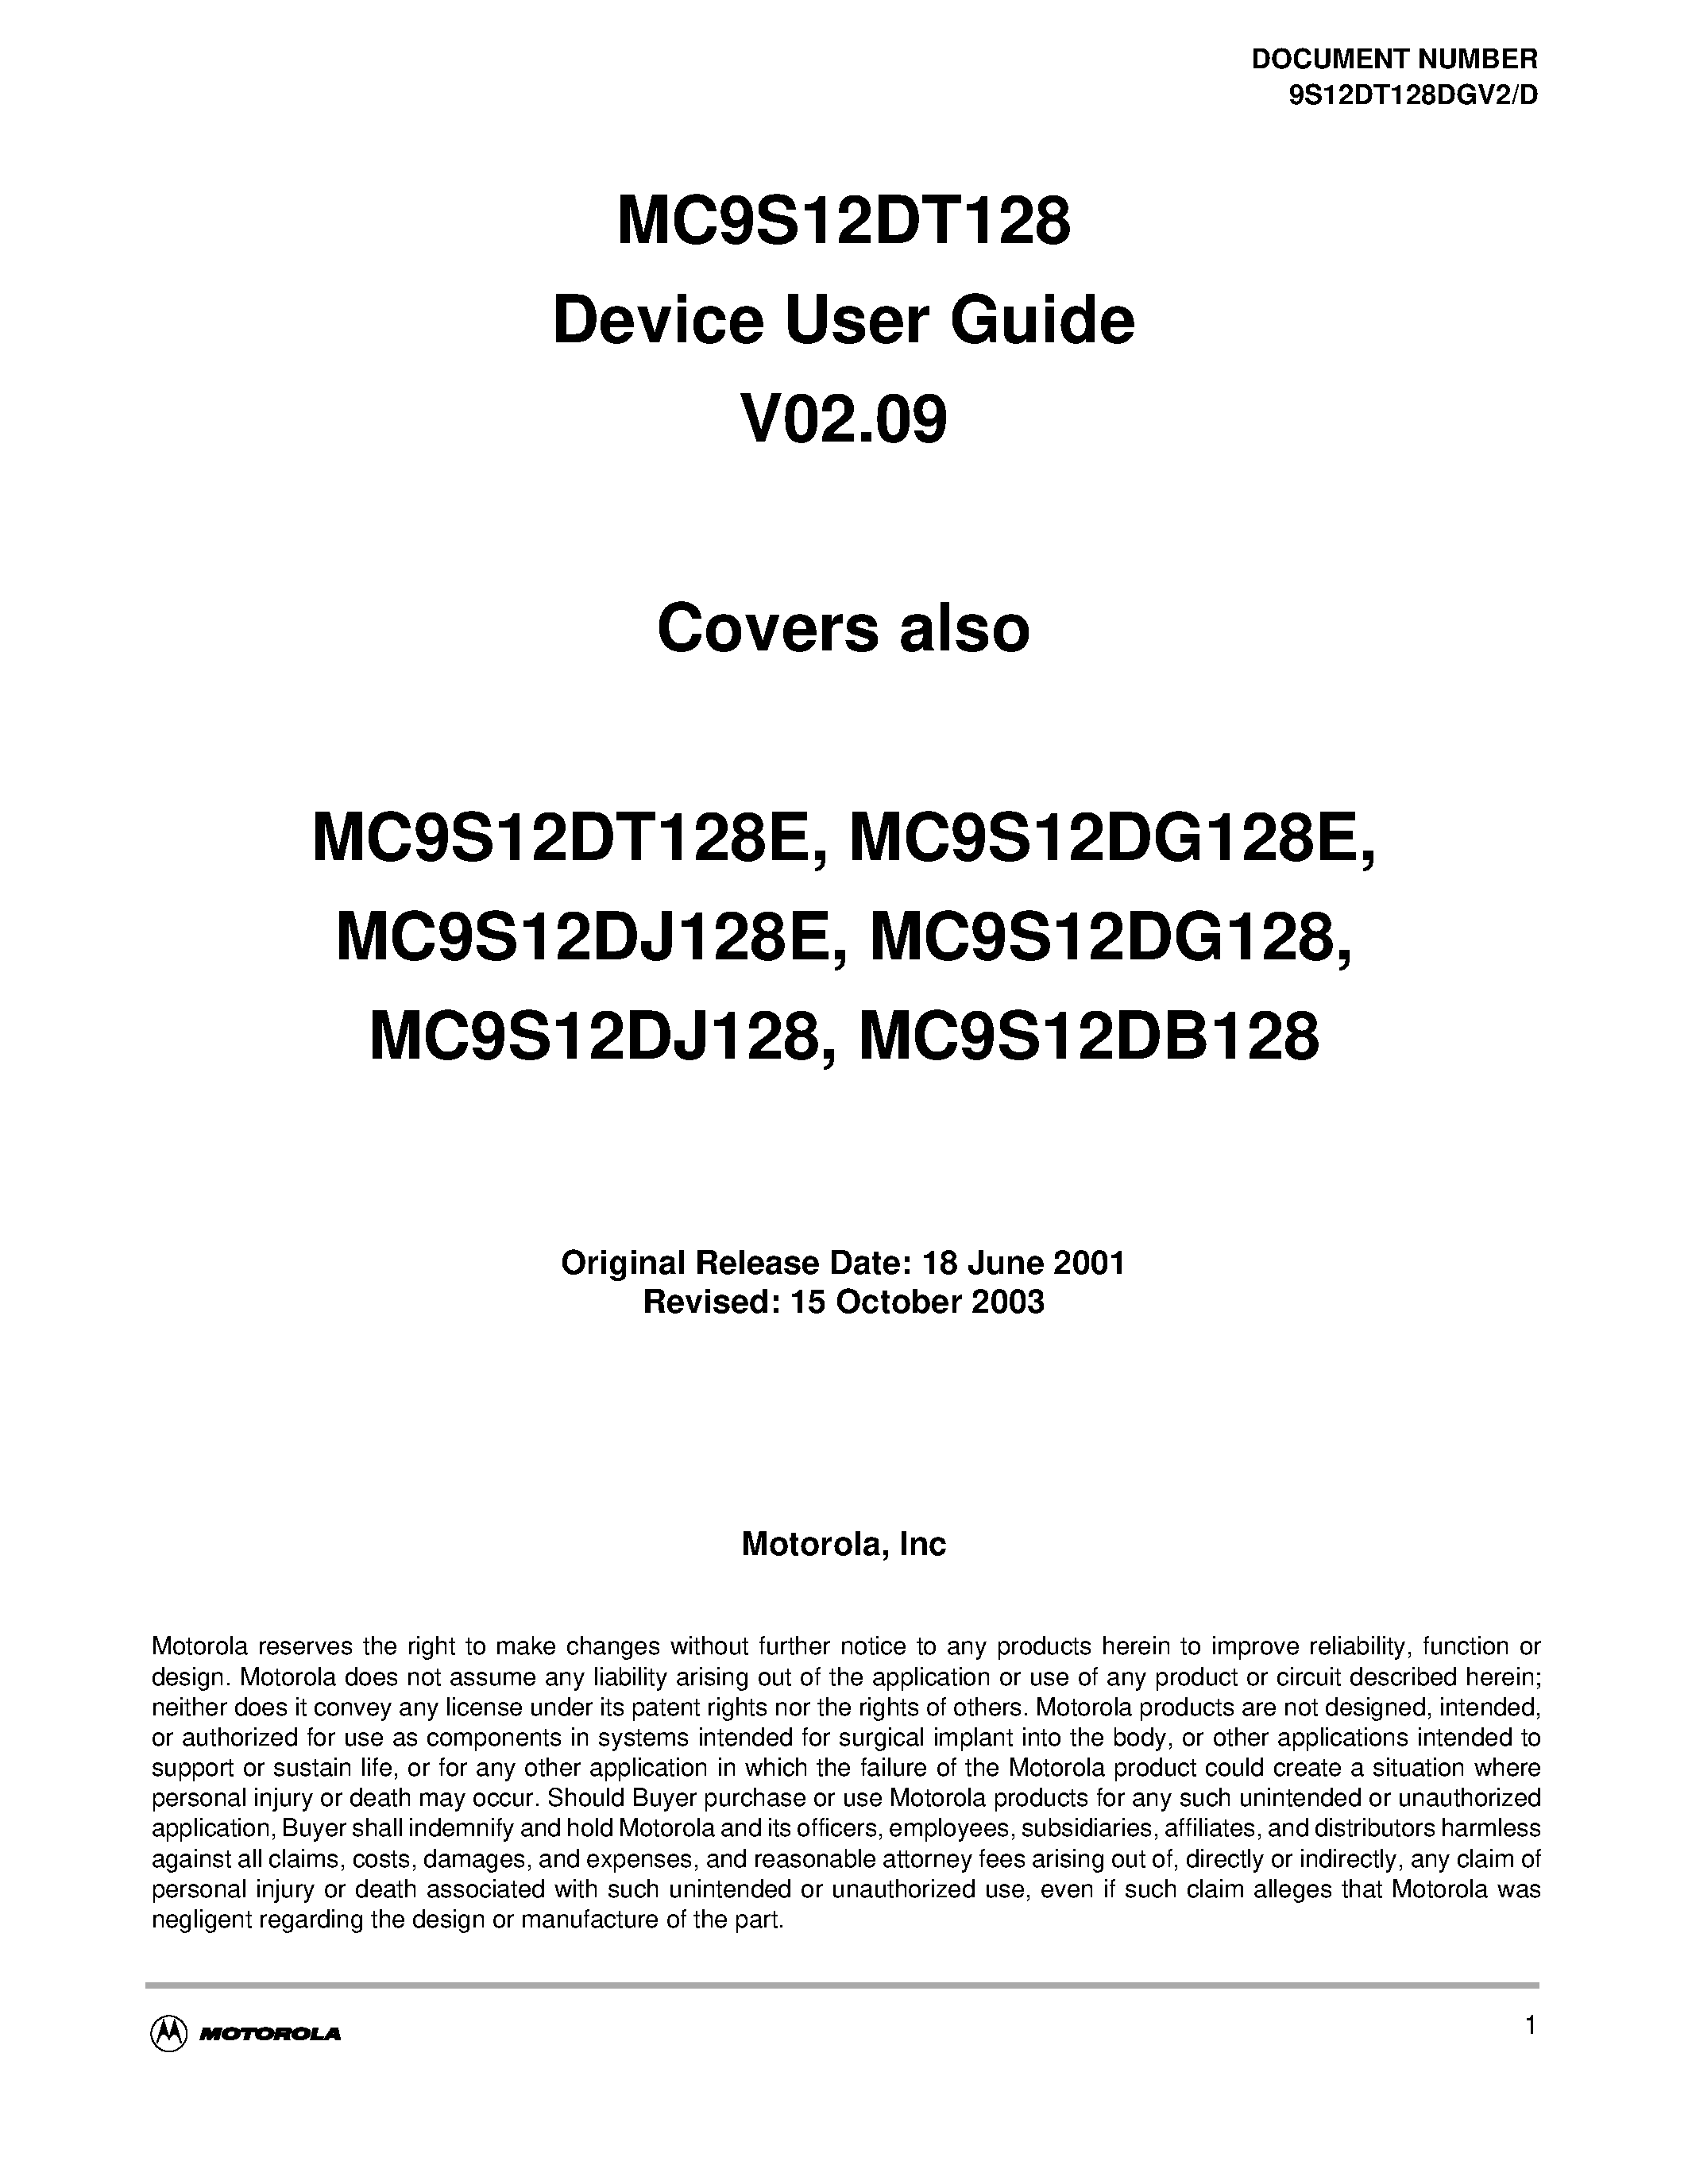 Даташит S12IICV2D - MC9S12DT128 Device User Guide V02.09 страница 1